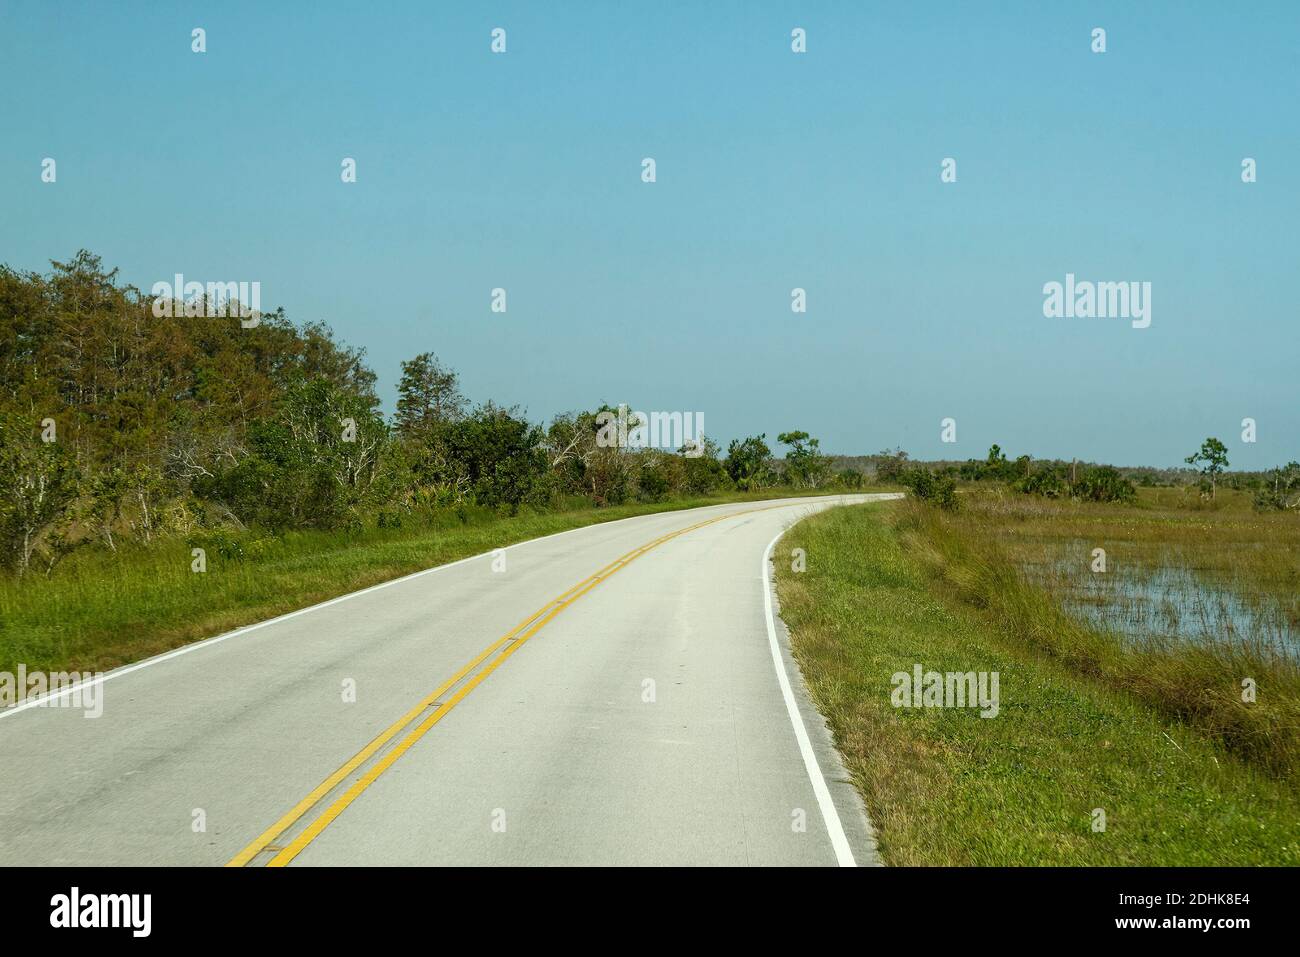 Main Park Road, 2 Land, Kurve, grüne Vegetation, Transport, Reisen, Everglades National Park, Florida, Flamingo, FL Stockfoto